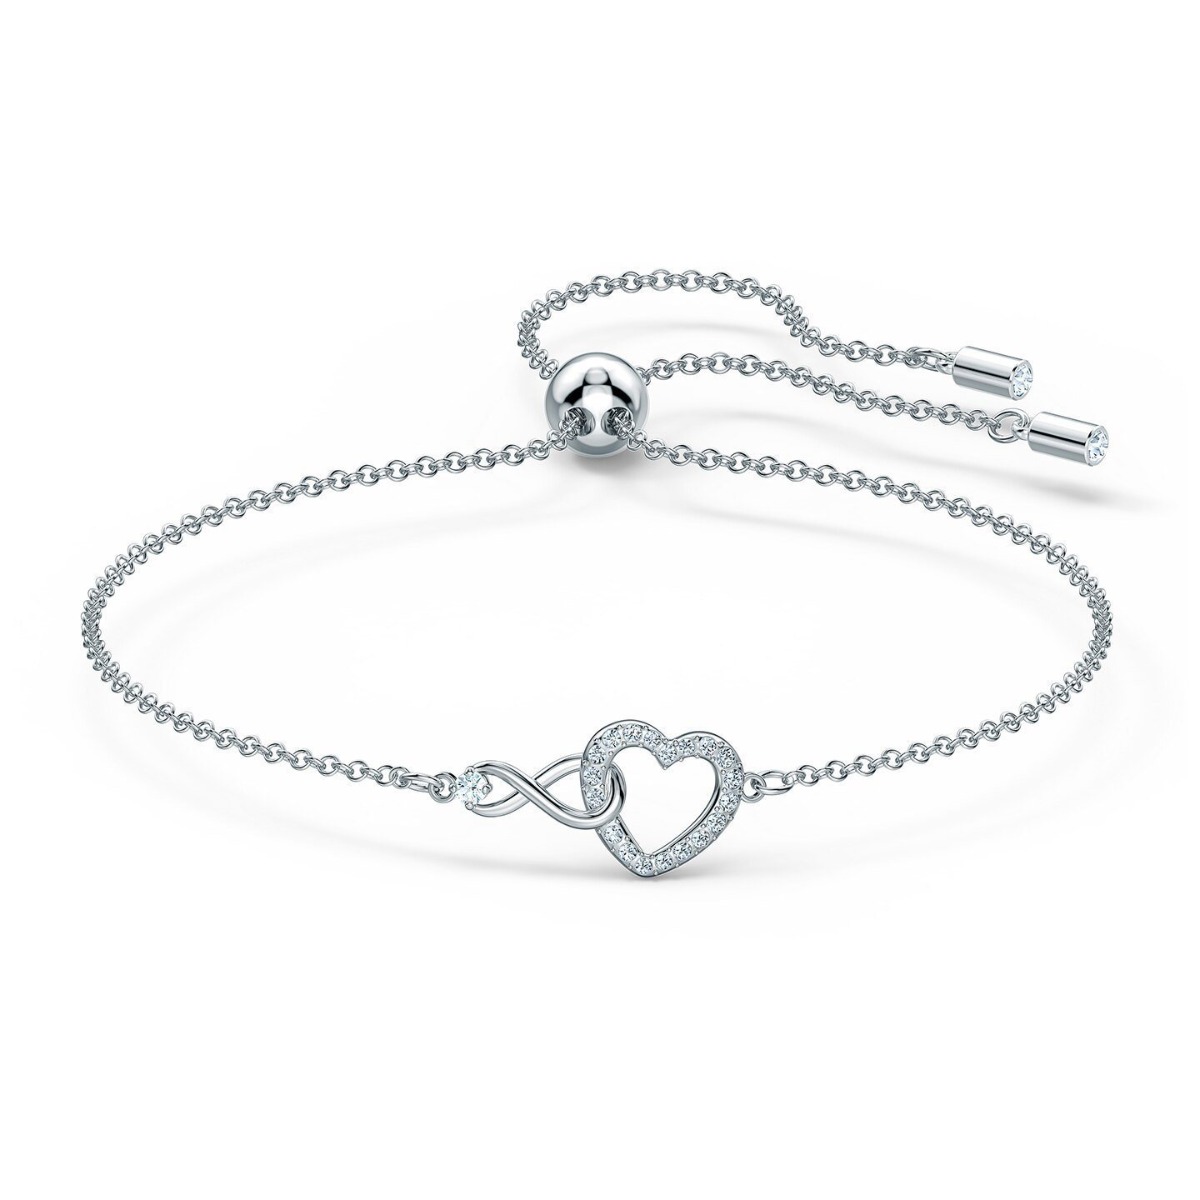 Swarovski Infinity Heart Bracelet - Rhodium Plated - 5524421